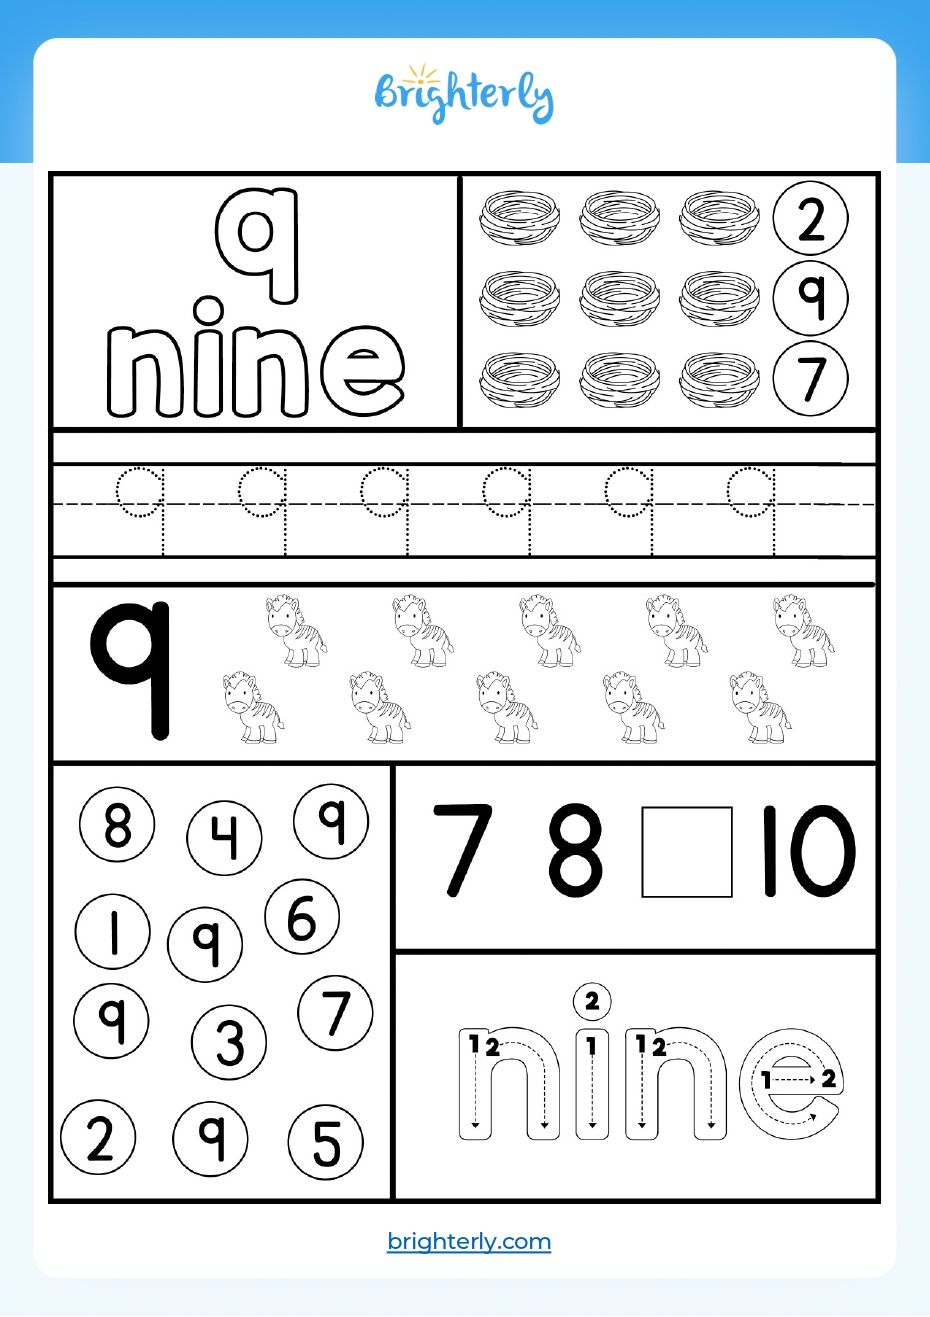 free-printable-number-9-nine-worksheets-for-kids-pdfs-brighterly